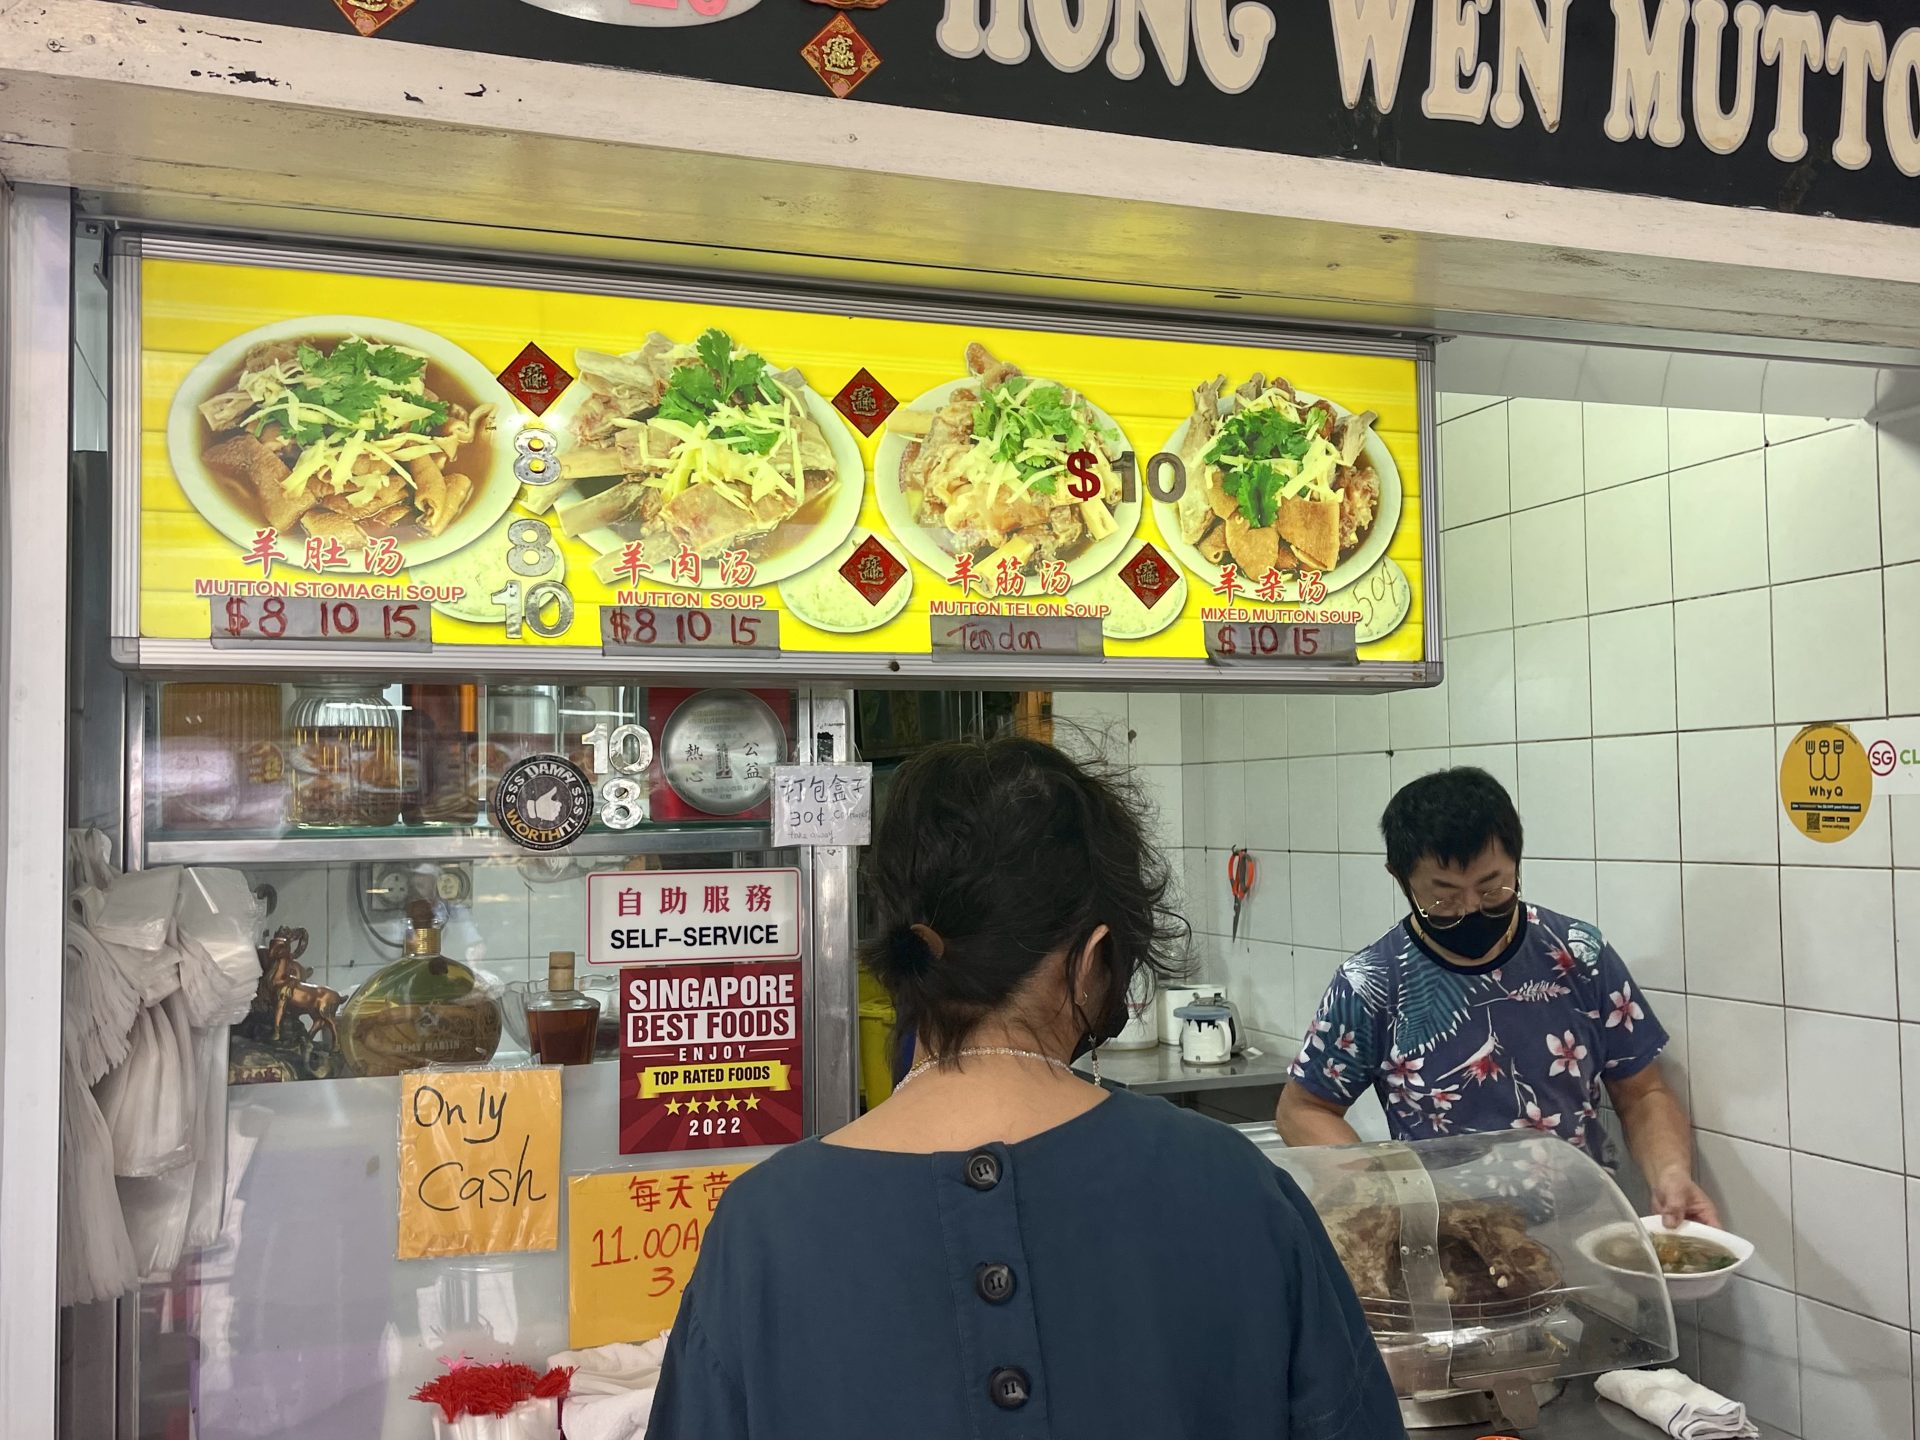 Hong Wen Mutton Soup 2